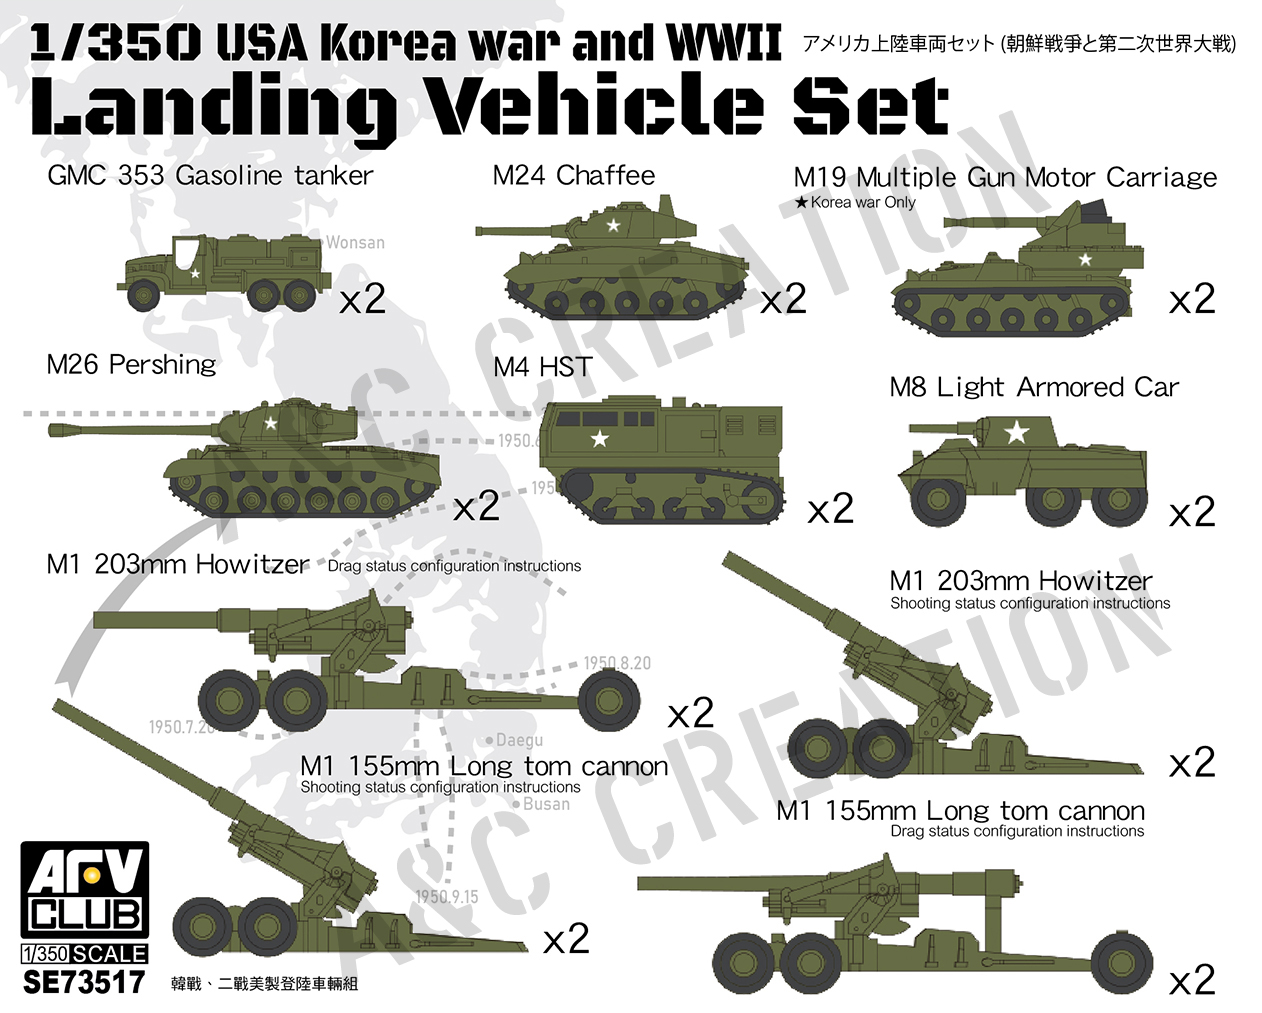 SE73517 USA Korea War and WWIIO Landing Vehicle Set